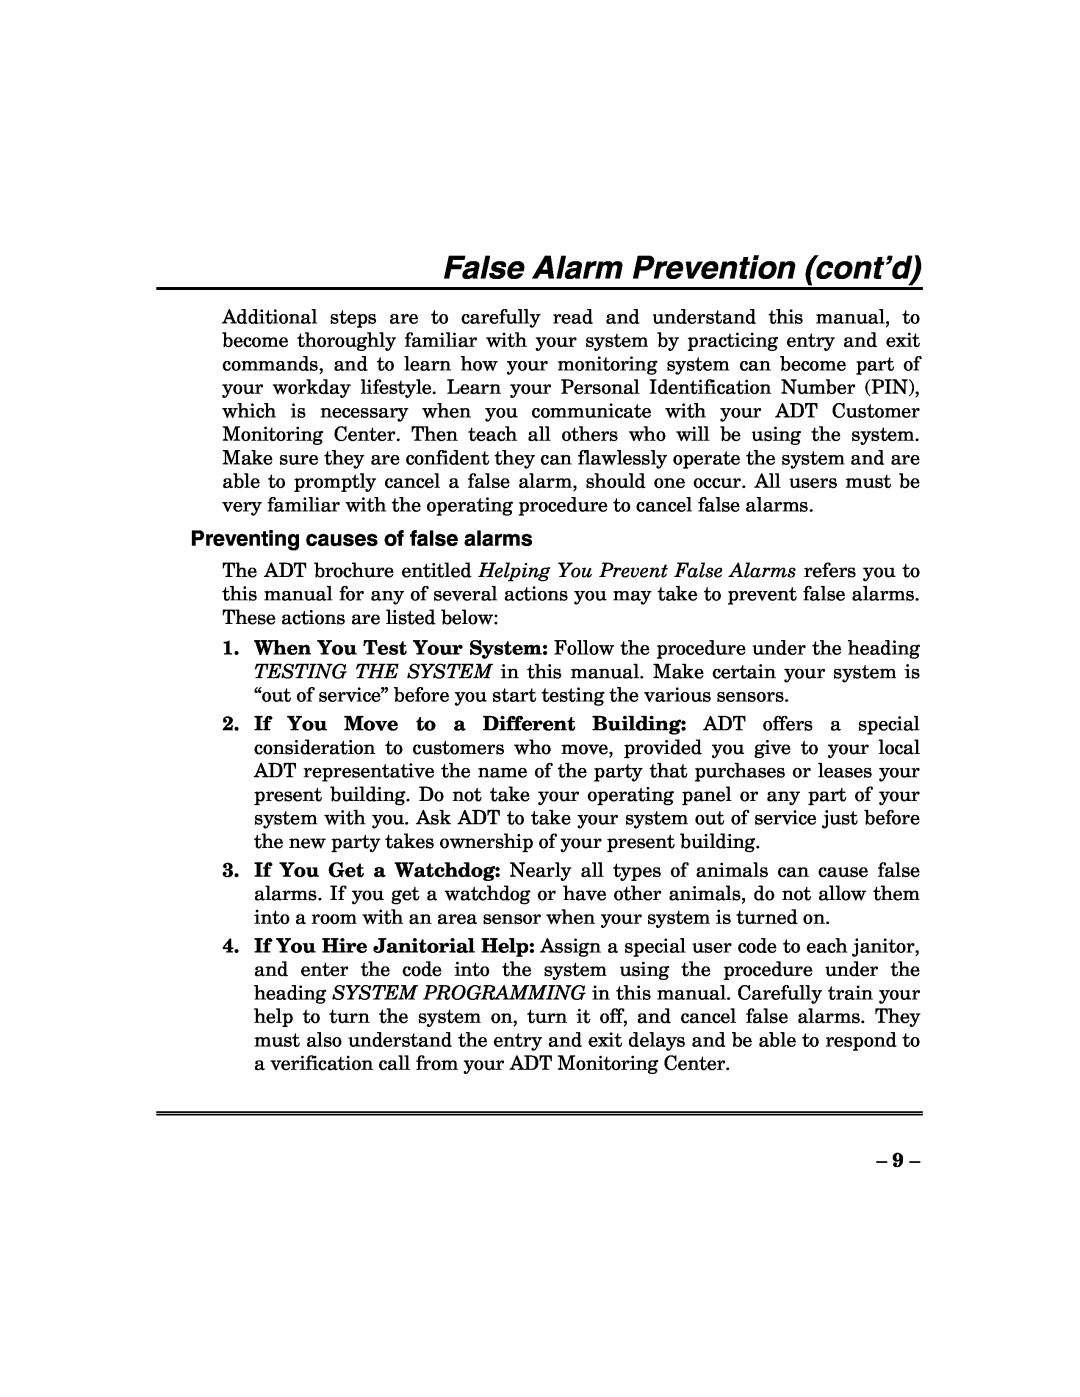 ADT Security Services 200 Plus manual Preventing causes of false alarms, False Alarm Prevention cont’d 